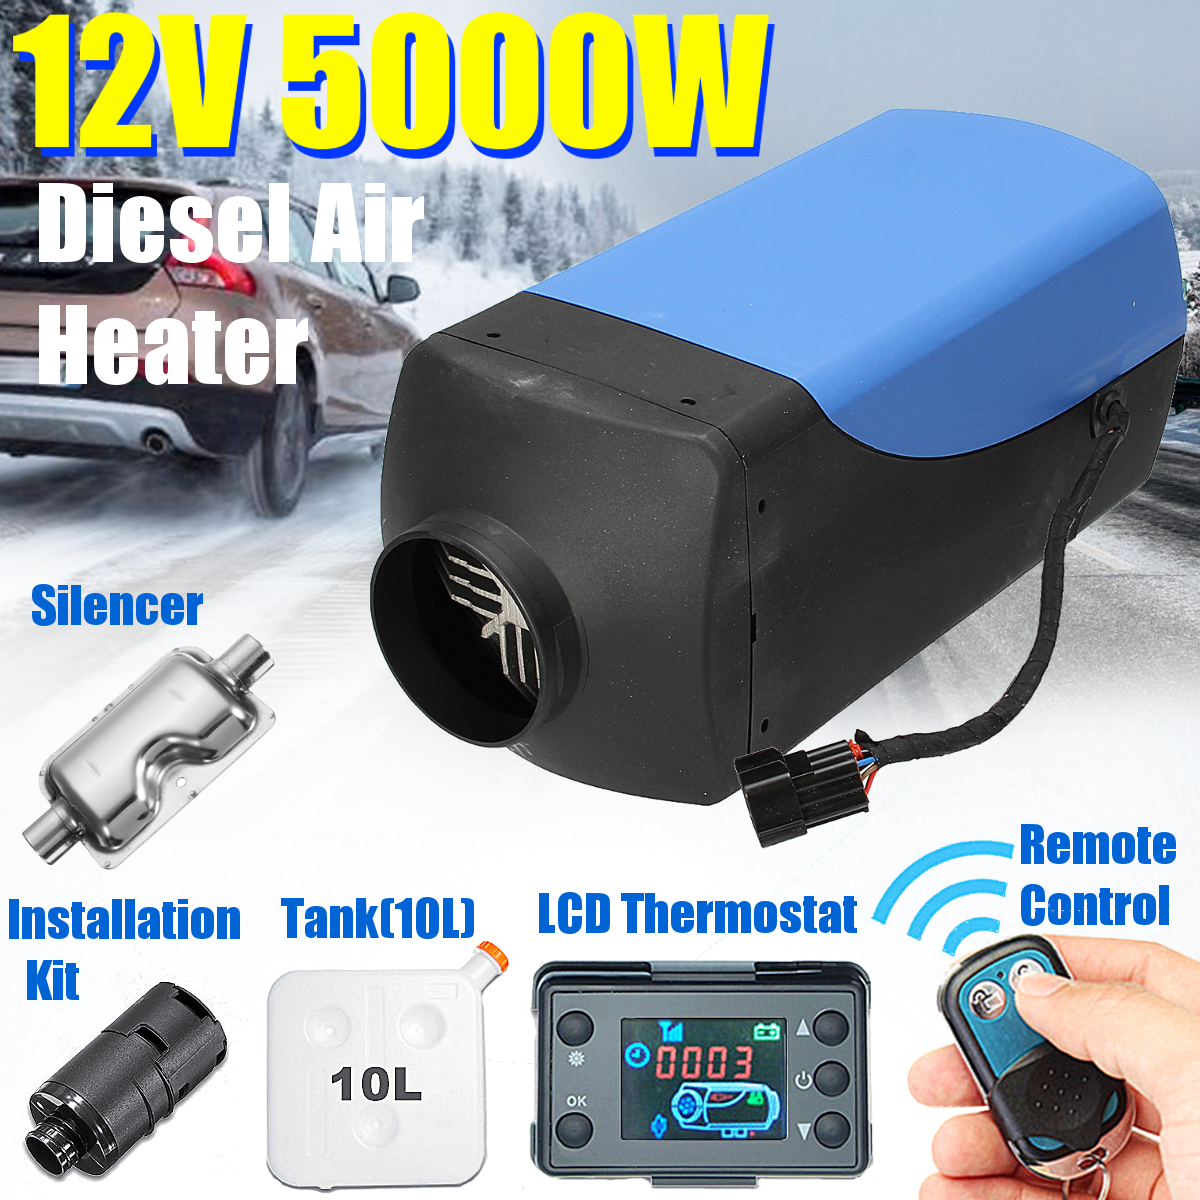 12V-5000W-Diesel-Air-Heater-Parking-Hearter-Warming-Heating-Equipment-Kit-Set-1354418